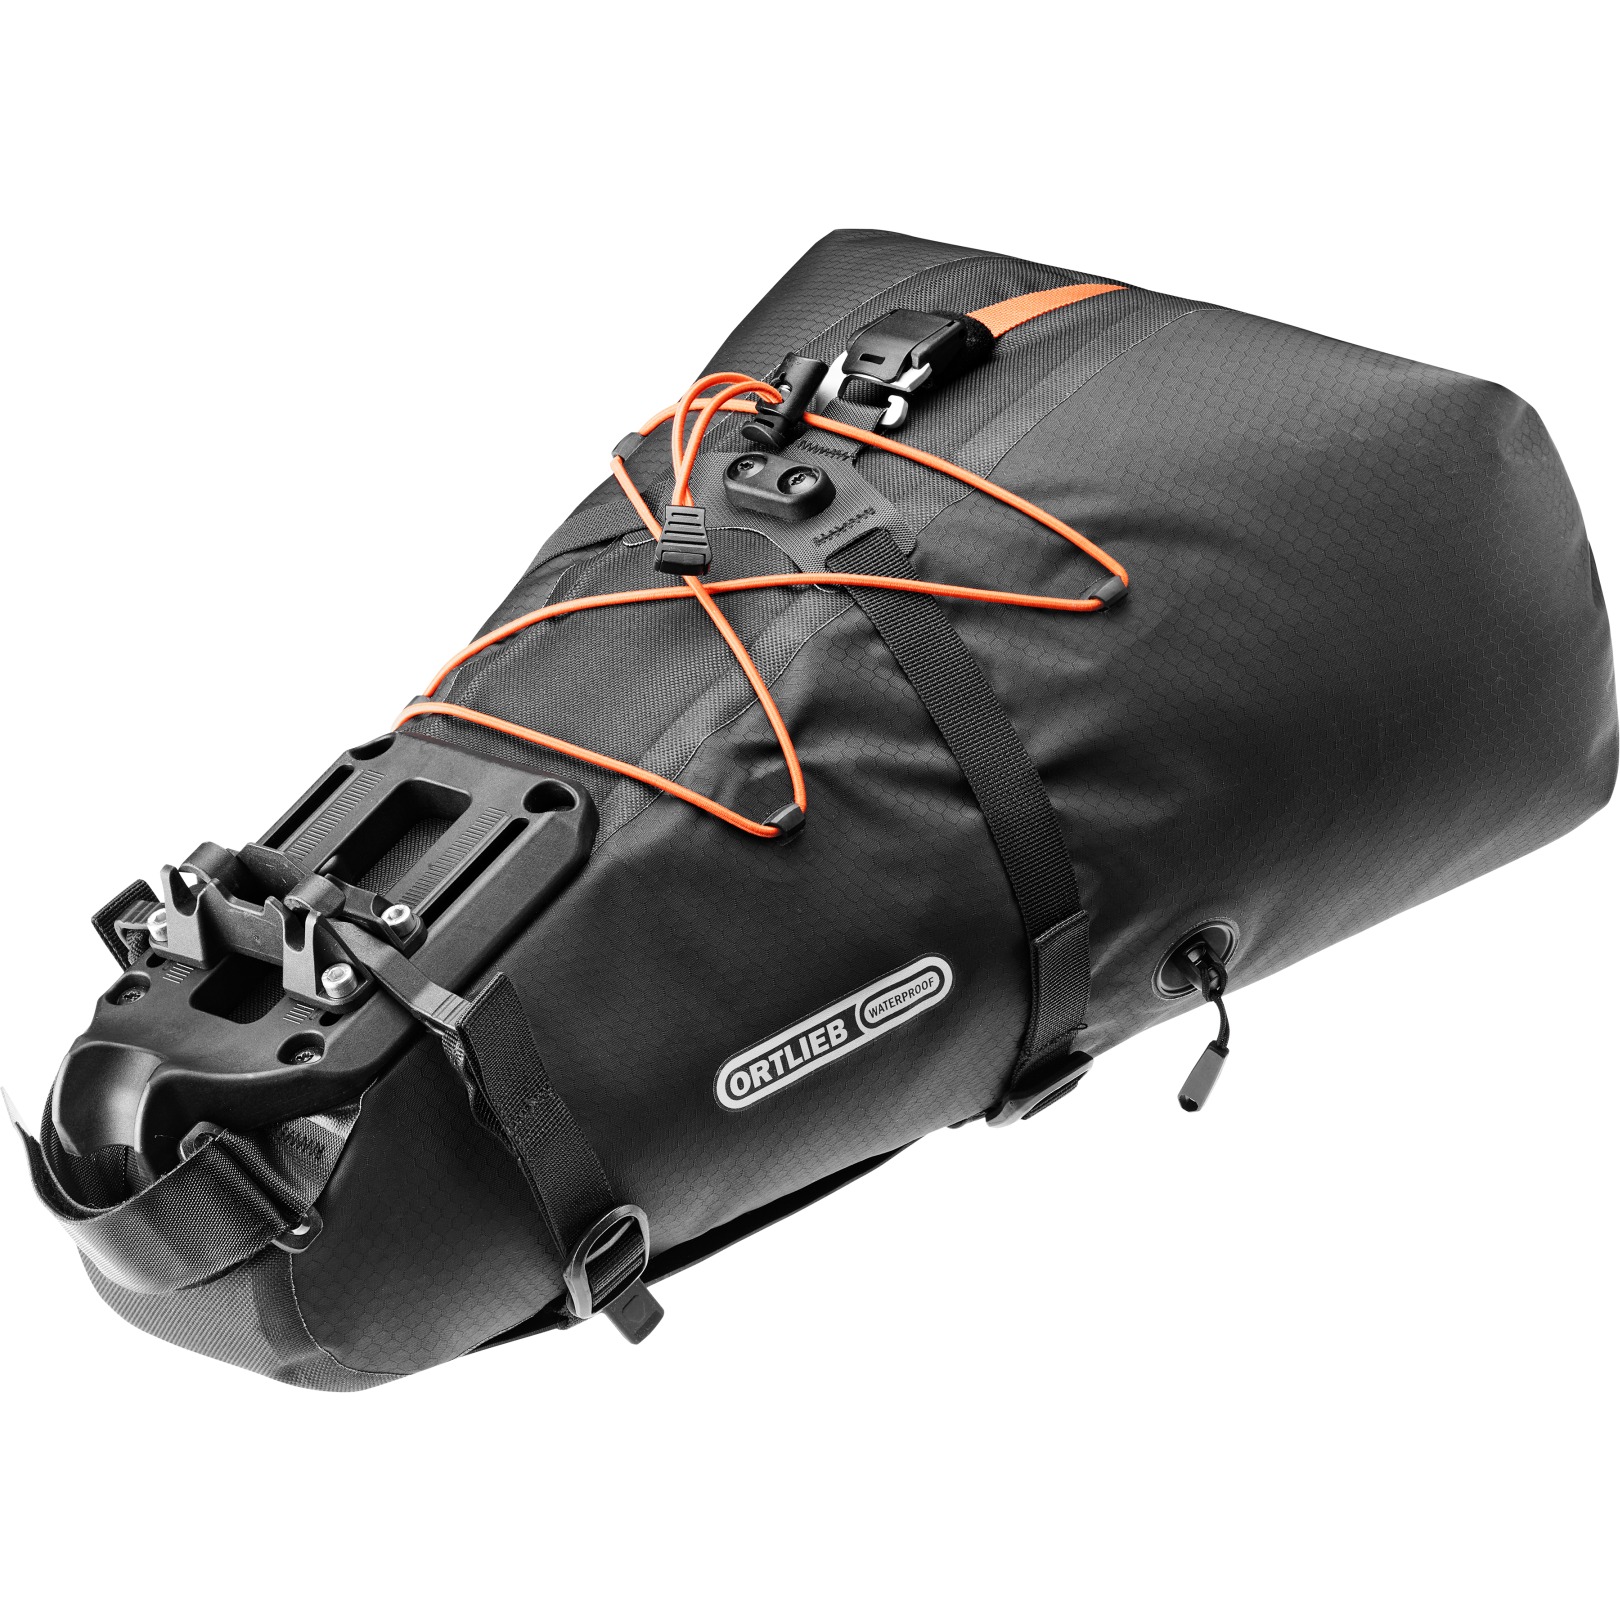 Productfoto van ORTLIEB Seat-Pack QR - 13L Zadeltas - black matt